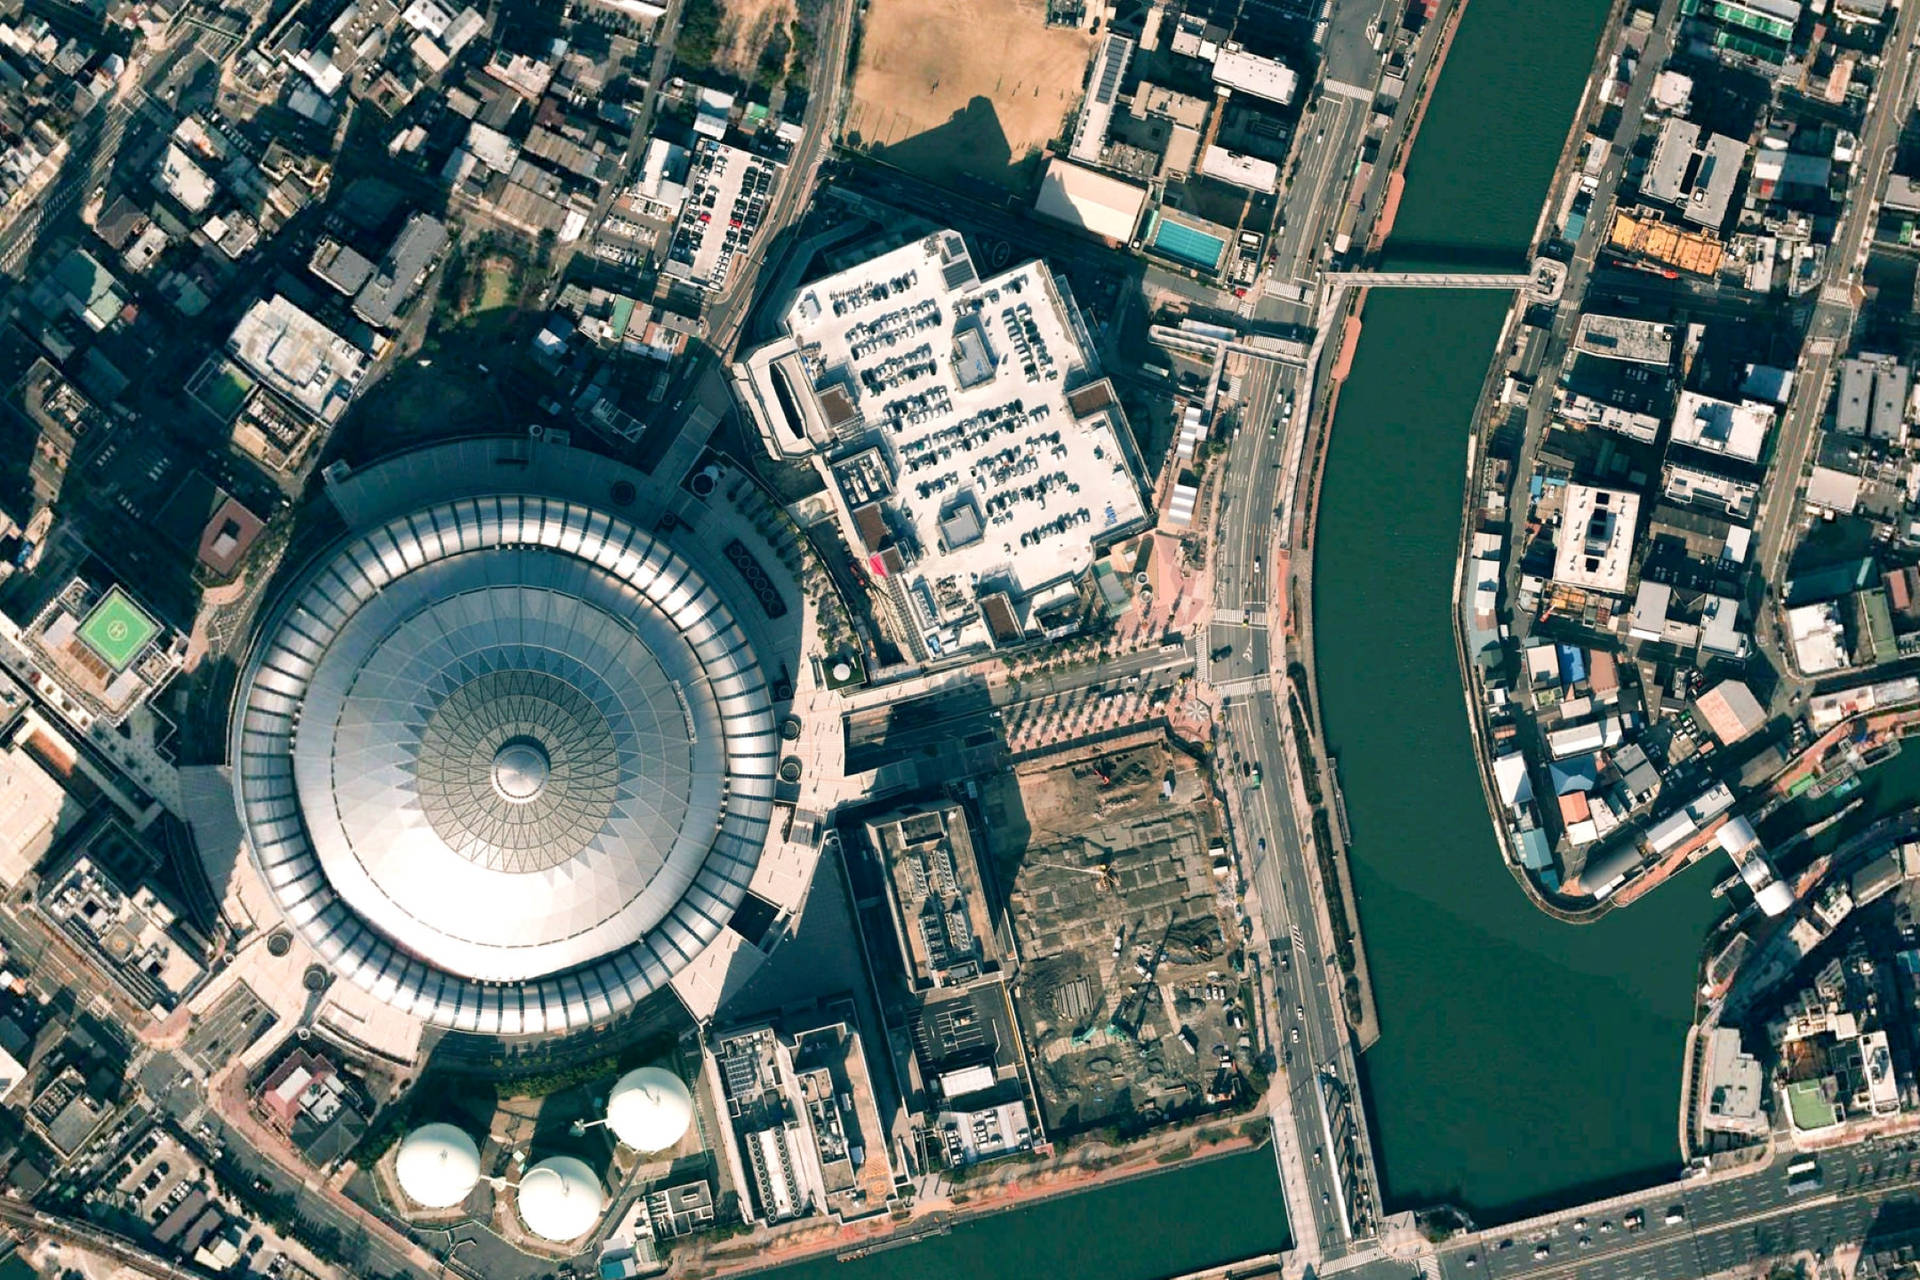 Googleearth Kyocera Dome Osaka - Google Earth En El Domo De Kyocera Osaka. Fondo de pantalla